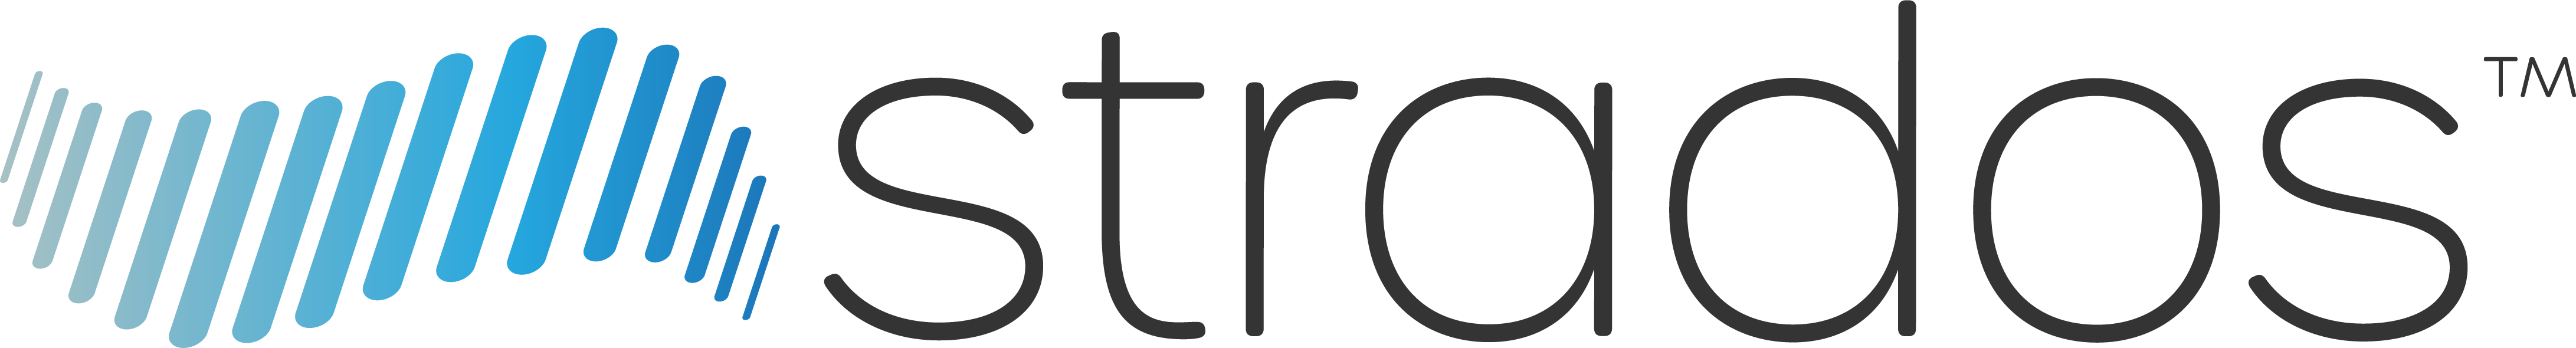 Strados New Logo